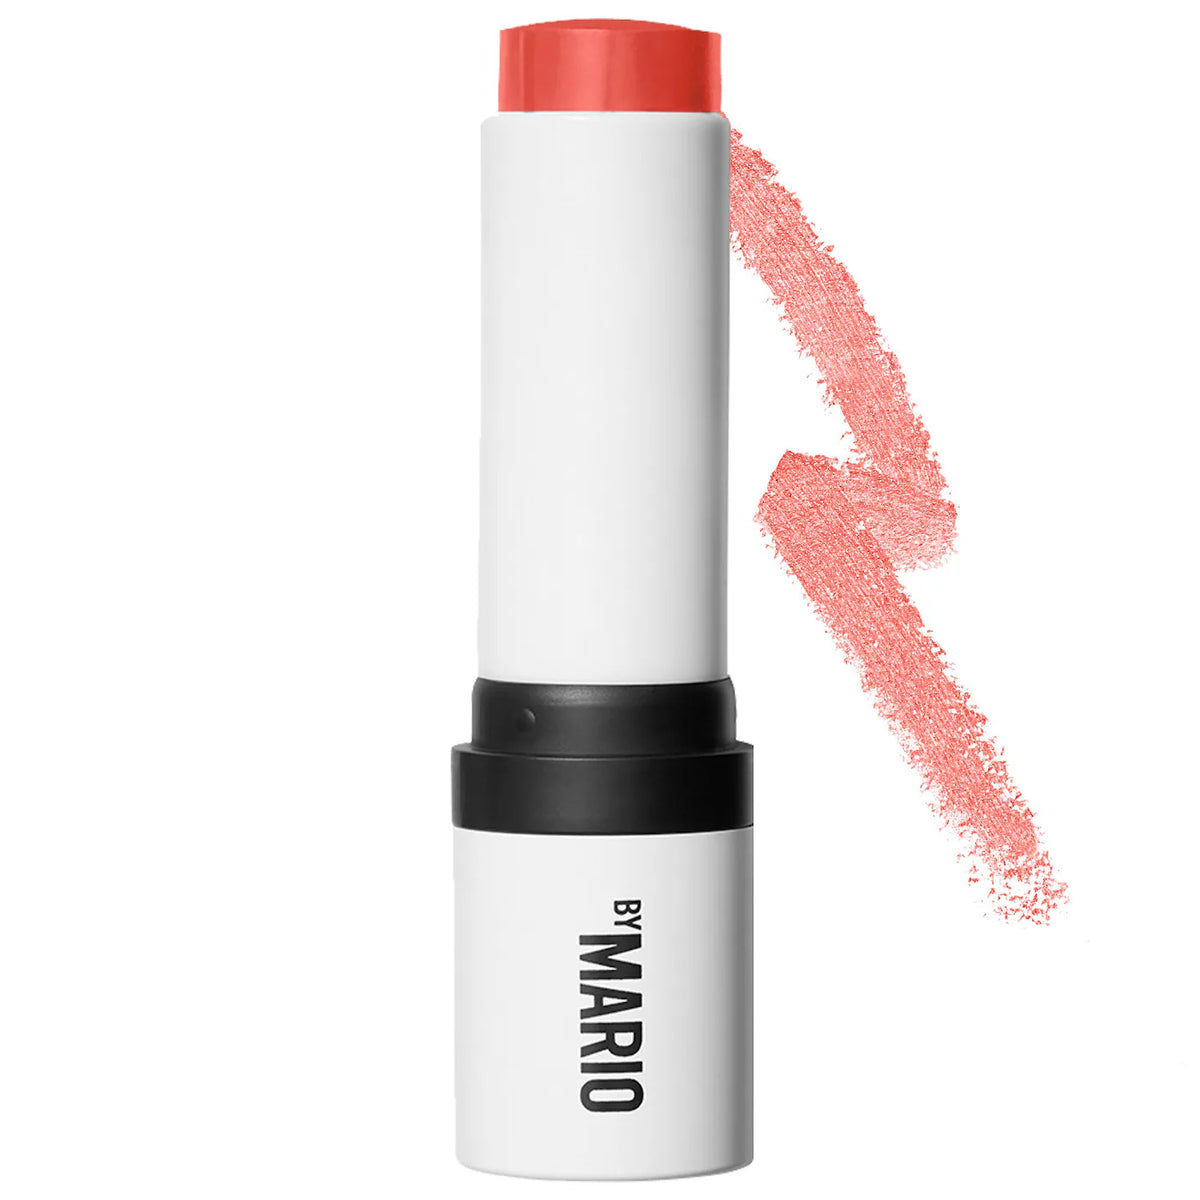 MAKEUP BY MARIO Soft Pop Blush Stick Cream blush Volare Makeup Soft Coral - peachy pop  